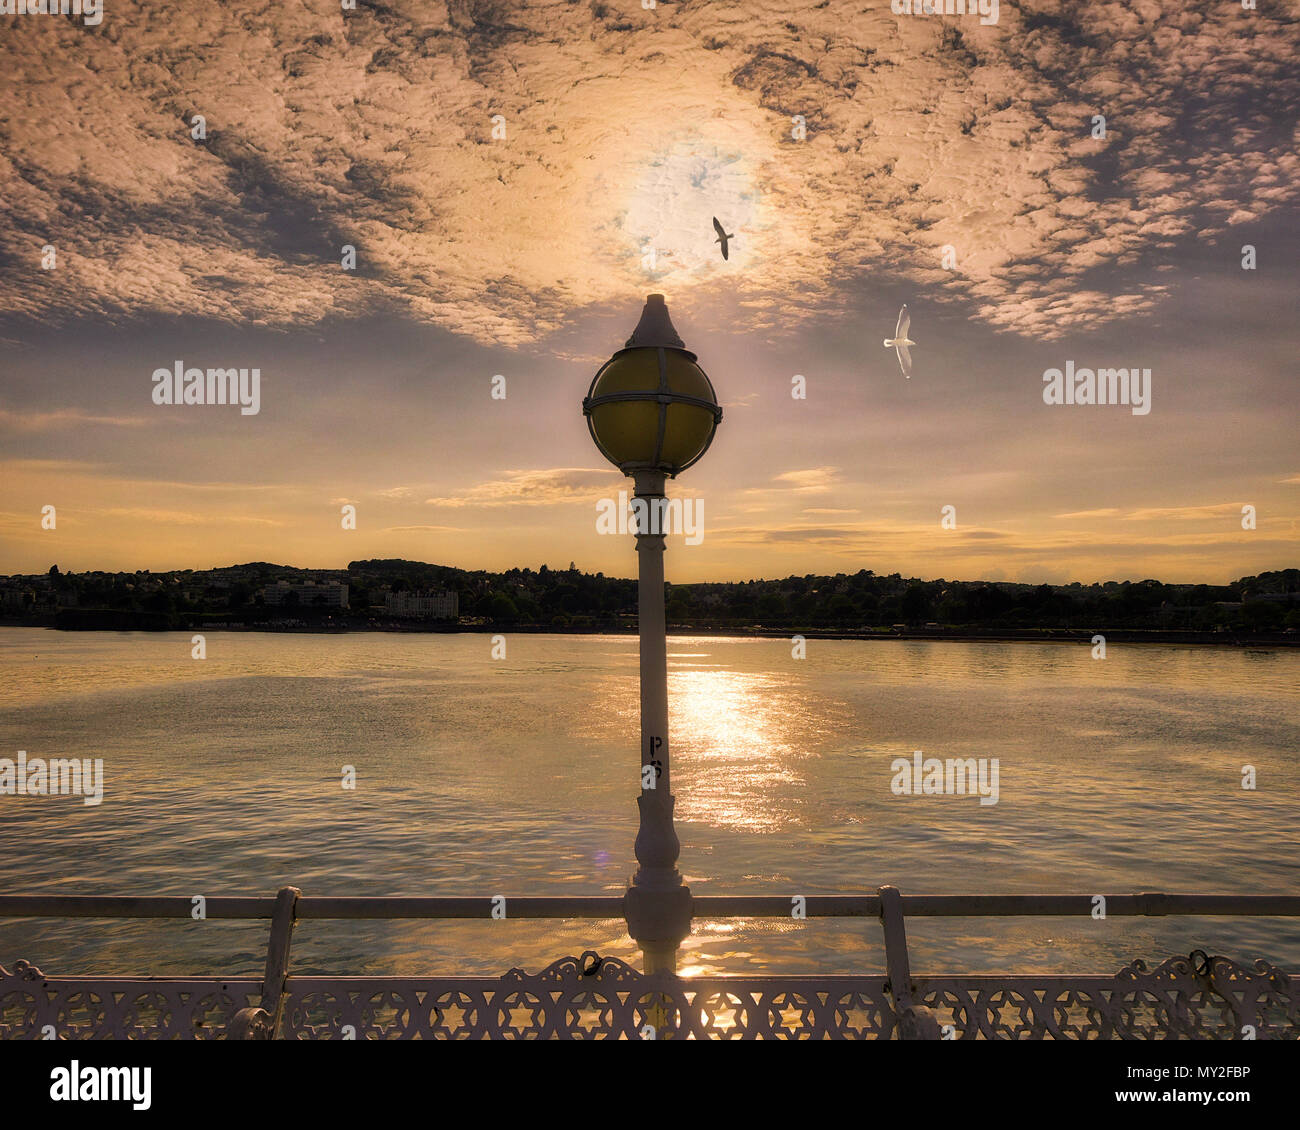 GB - DEVON: Sun setting over Princess Pier at Torquay  (HDR Image) Stock Photo